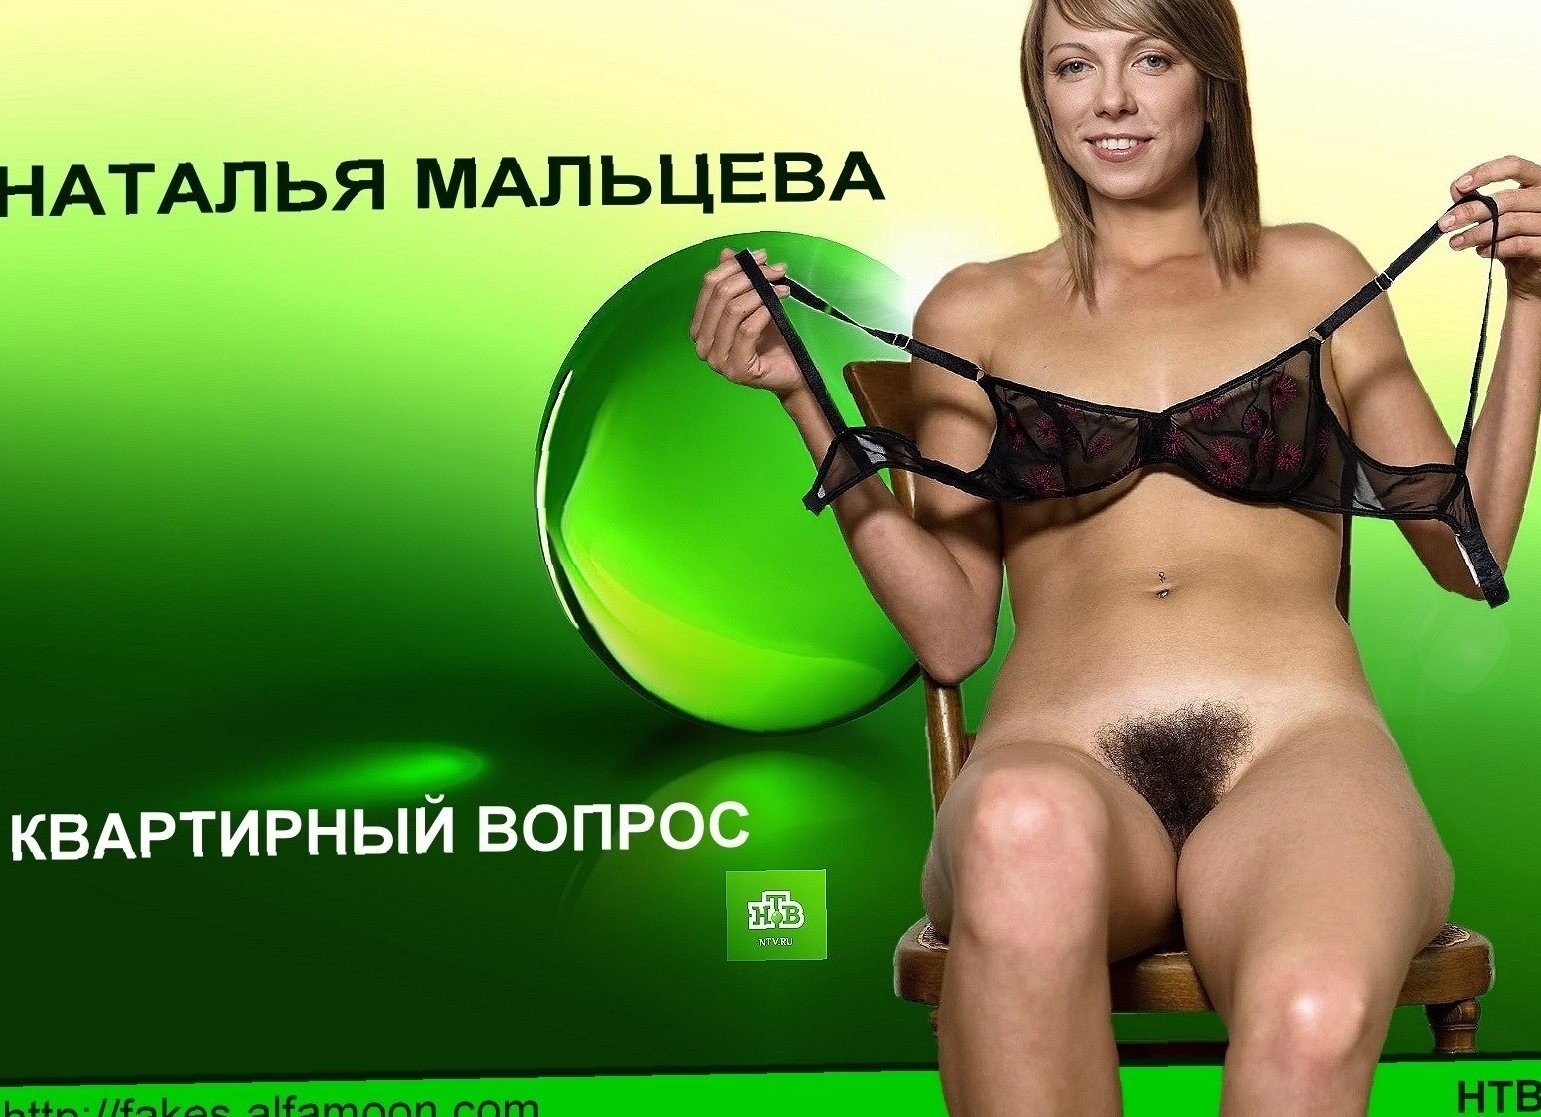 Nude Celebrities Russian TV Presenters (64 photos) - sex eporner pics